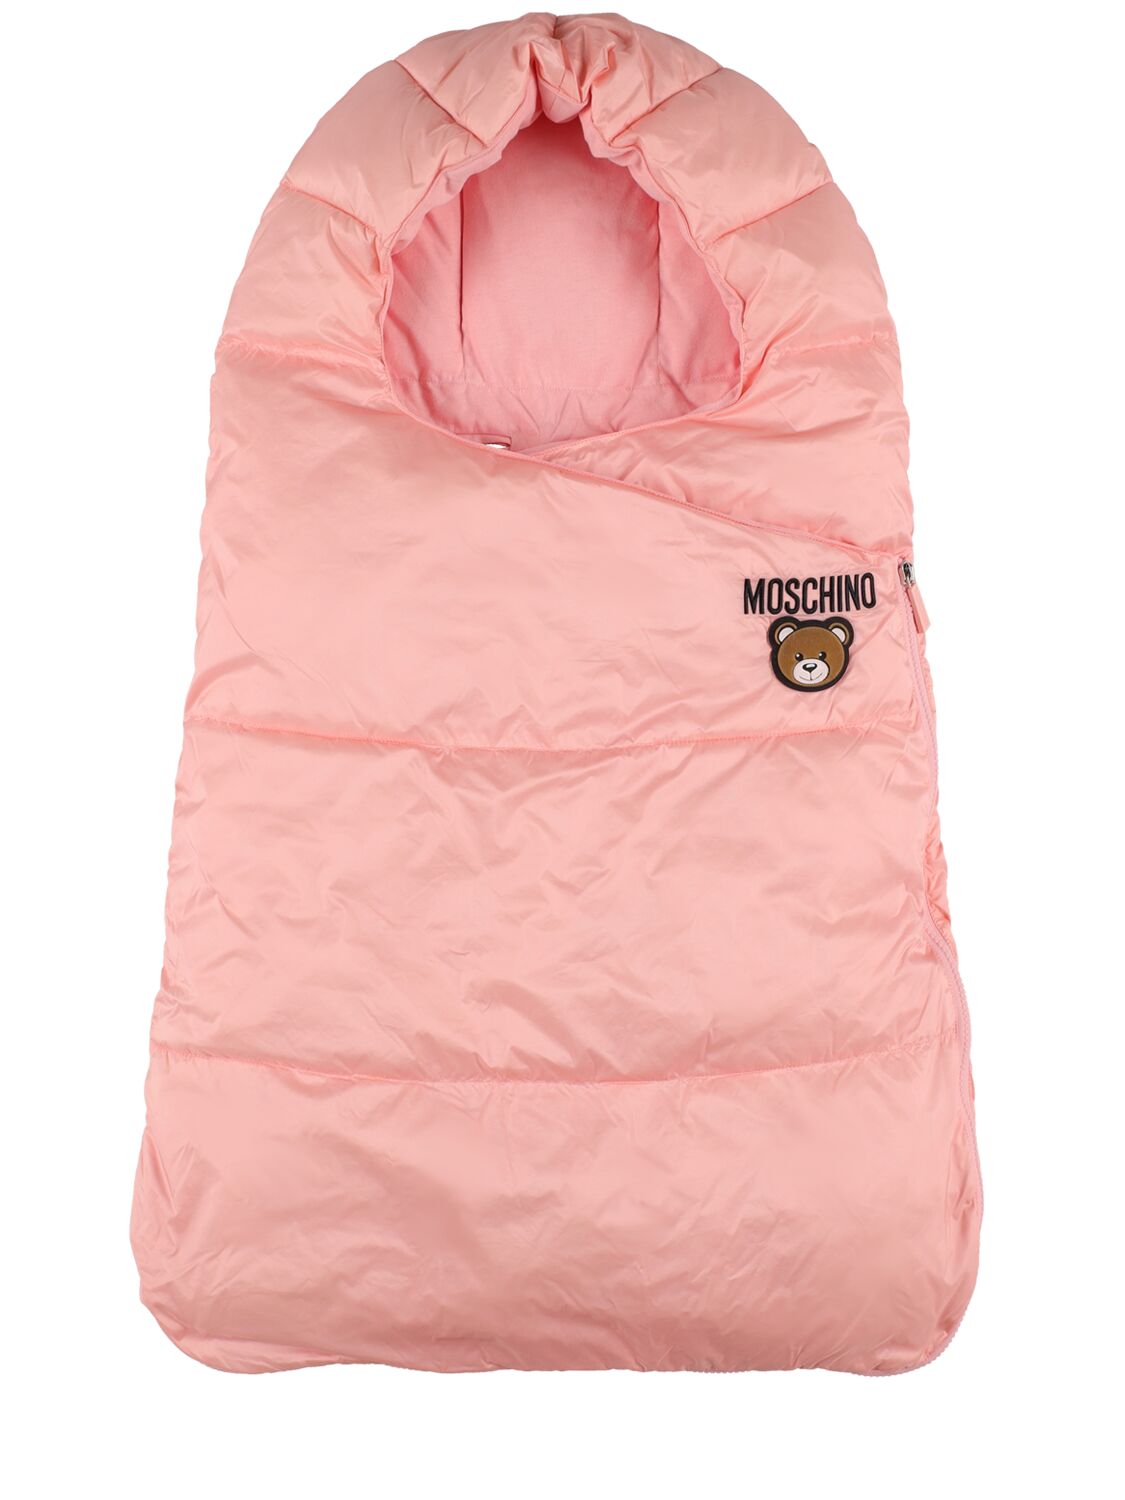 Image of Printed Nylon Puffer Sleeping Bag